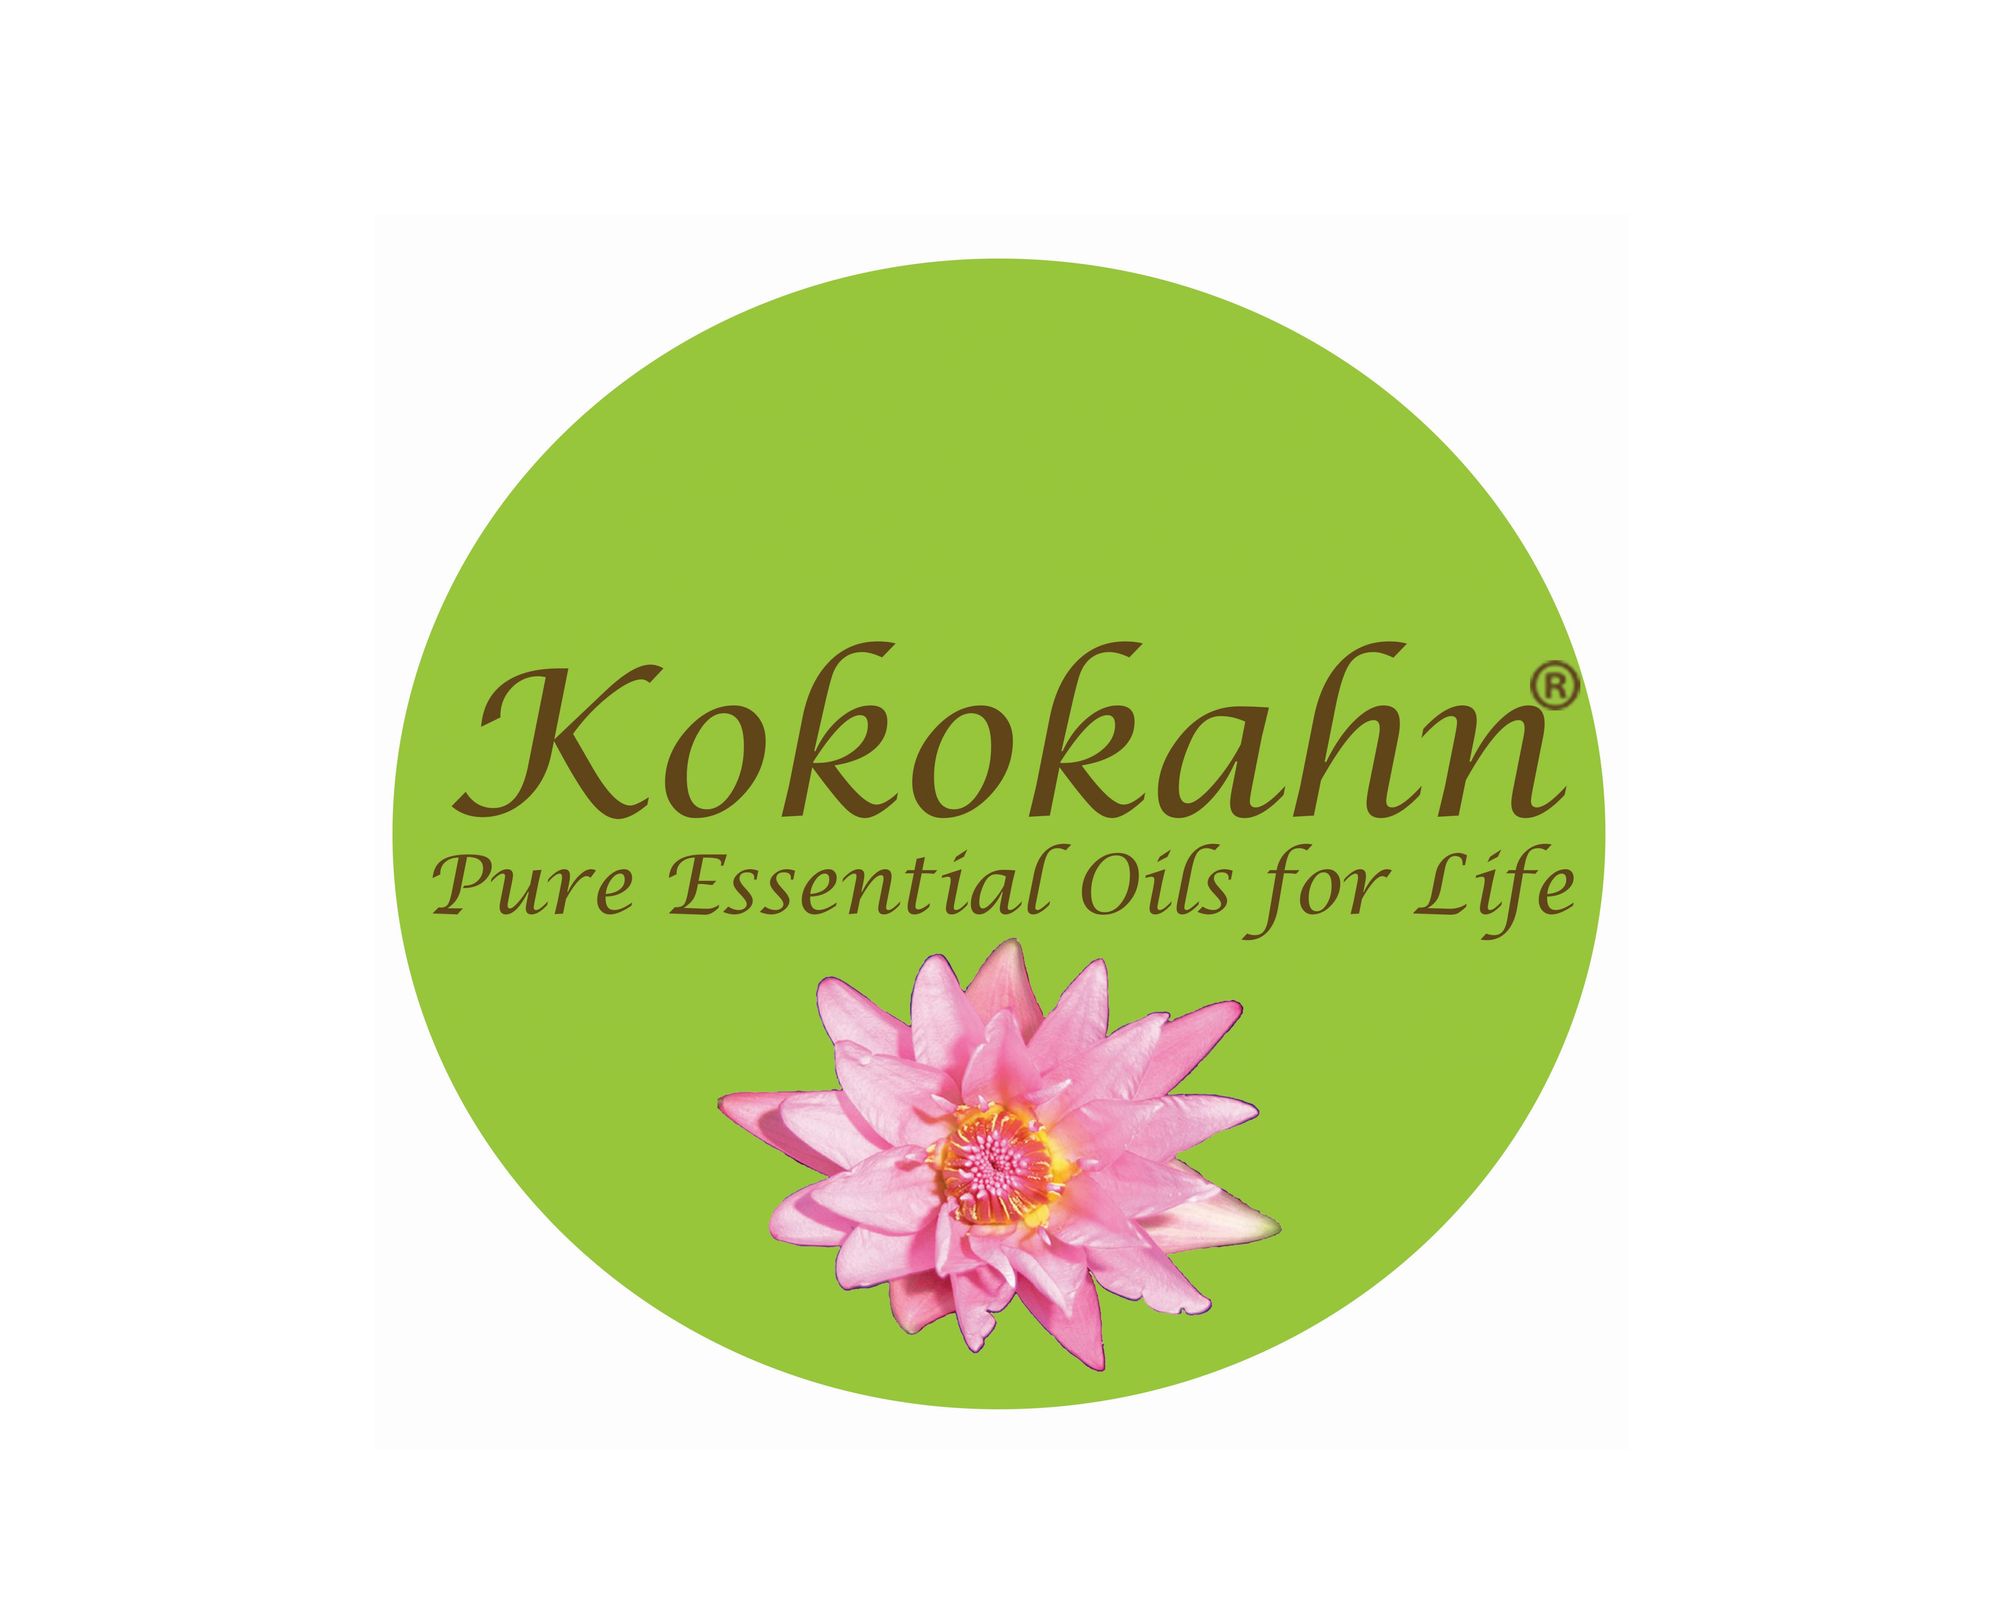 Open Yourself Up - Kokokahn Essential Oils